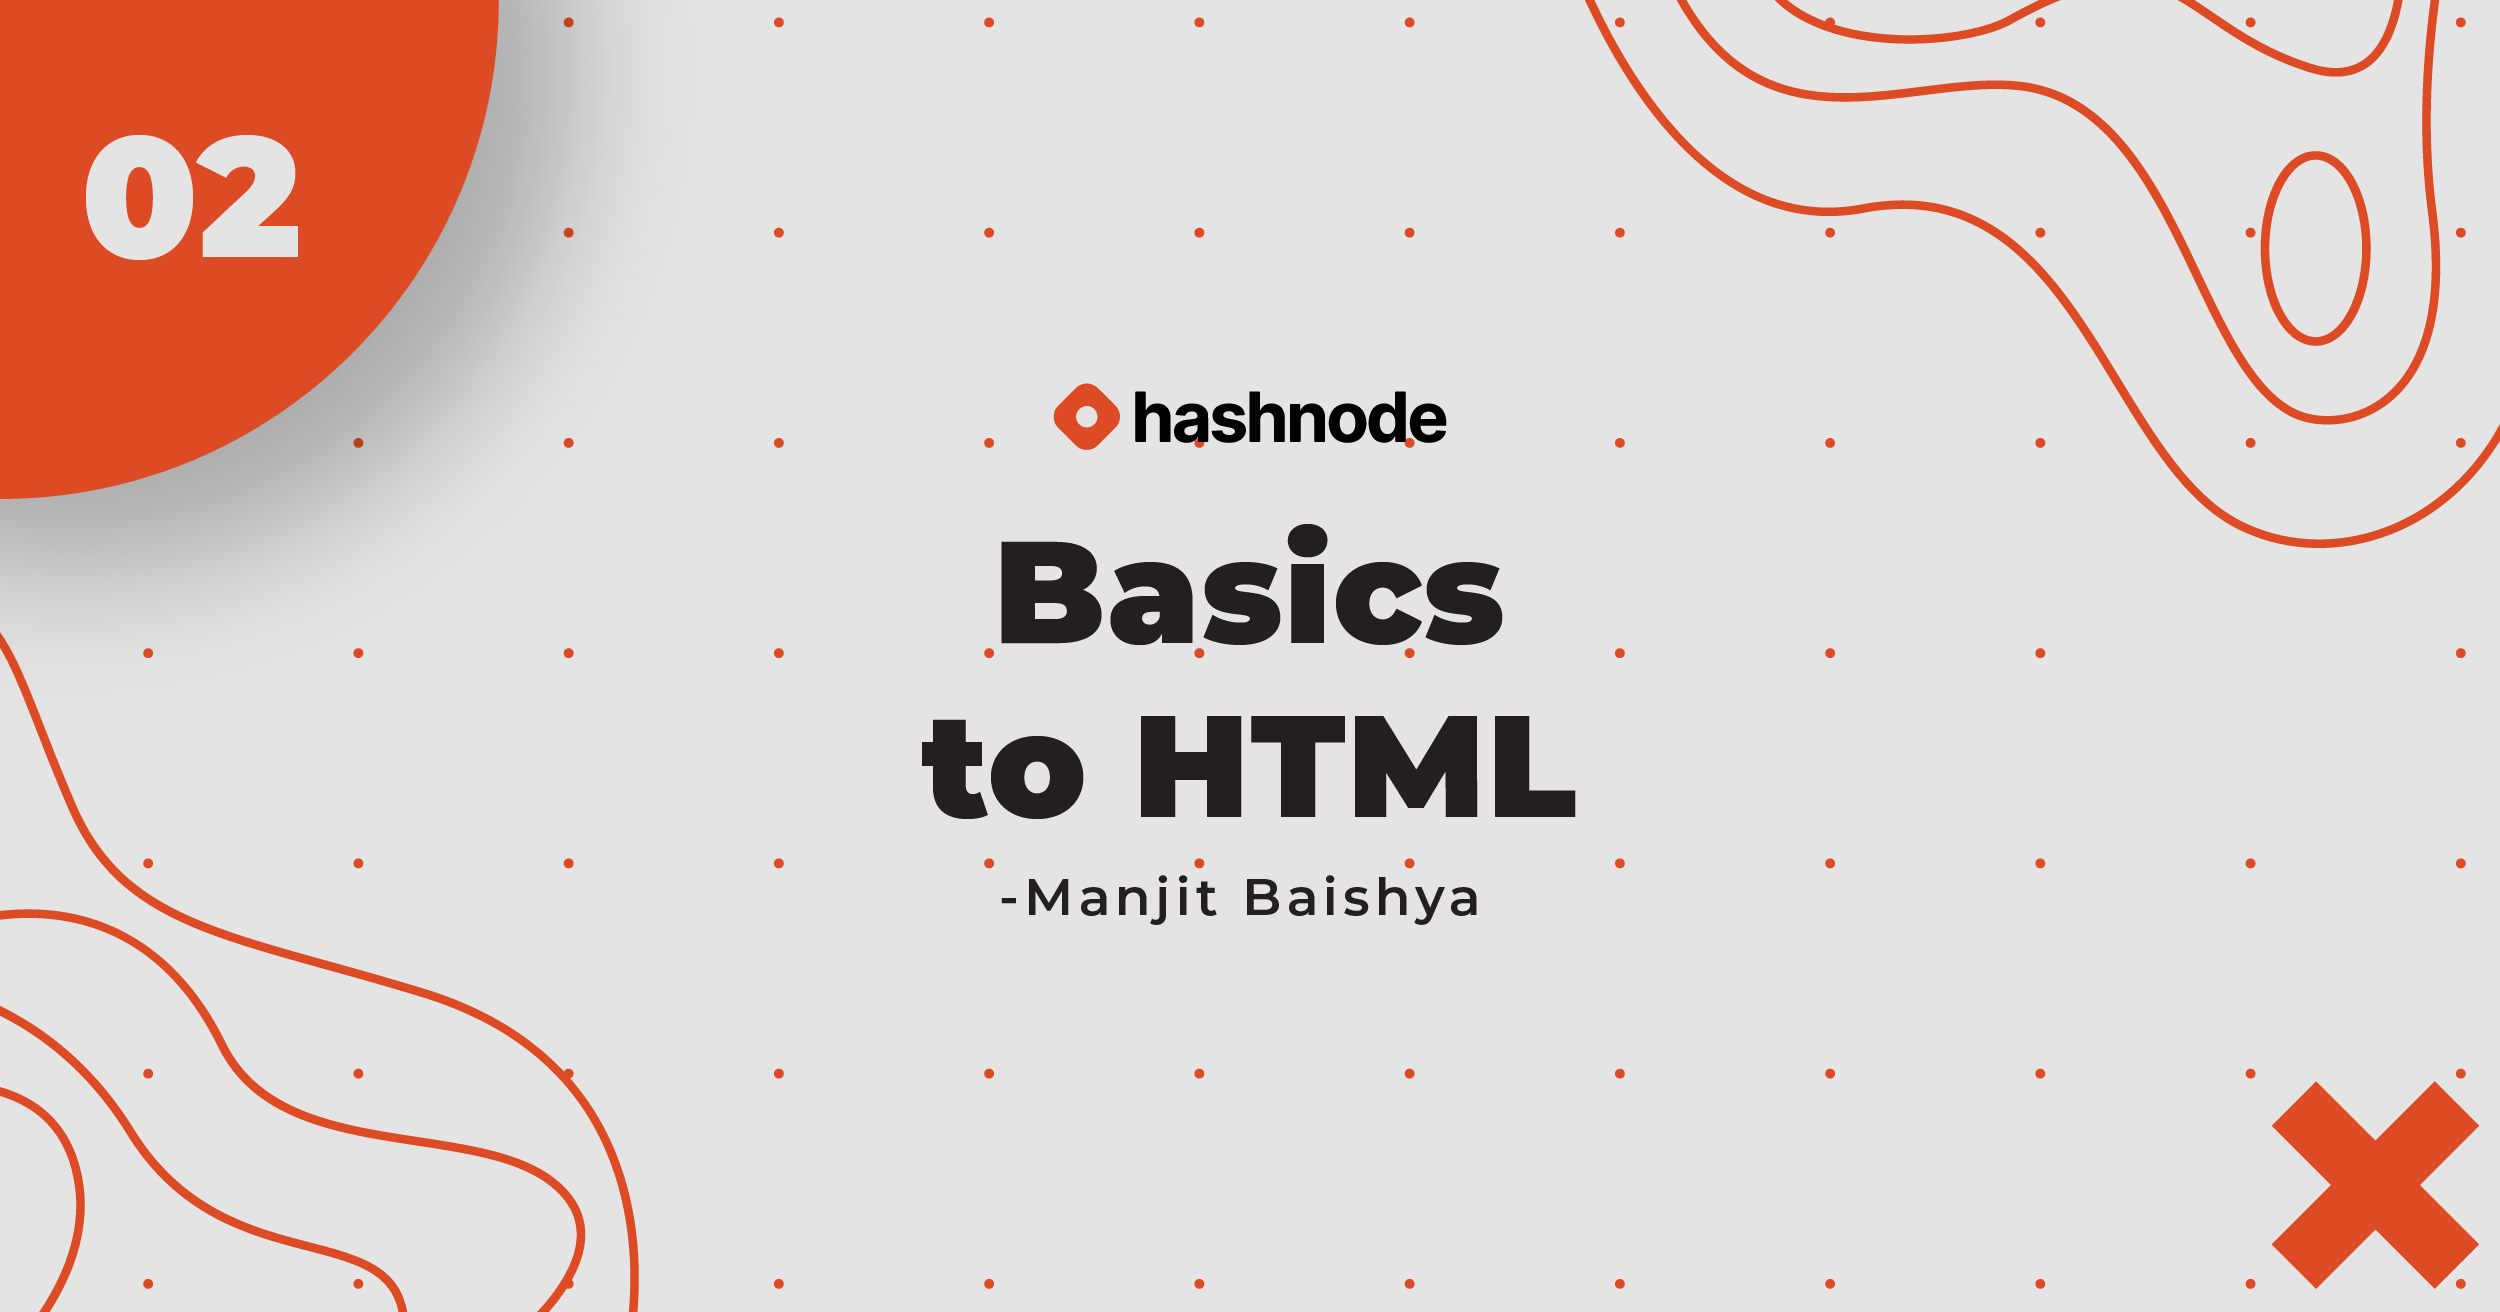 Day 02: Basics to HTML